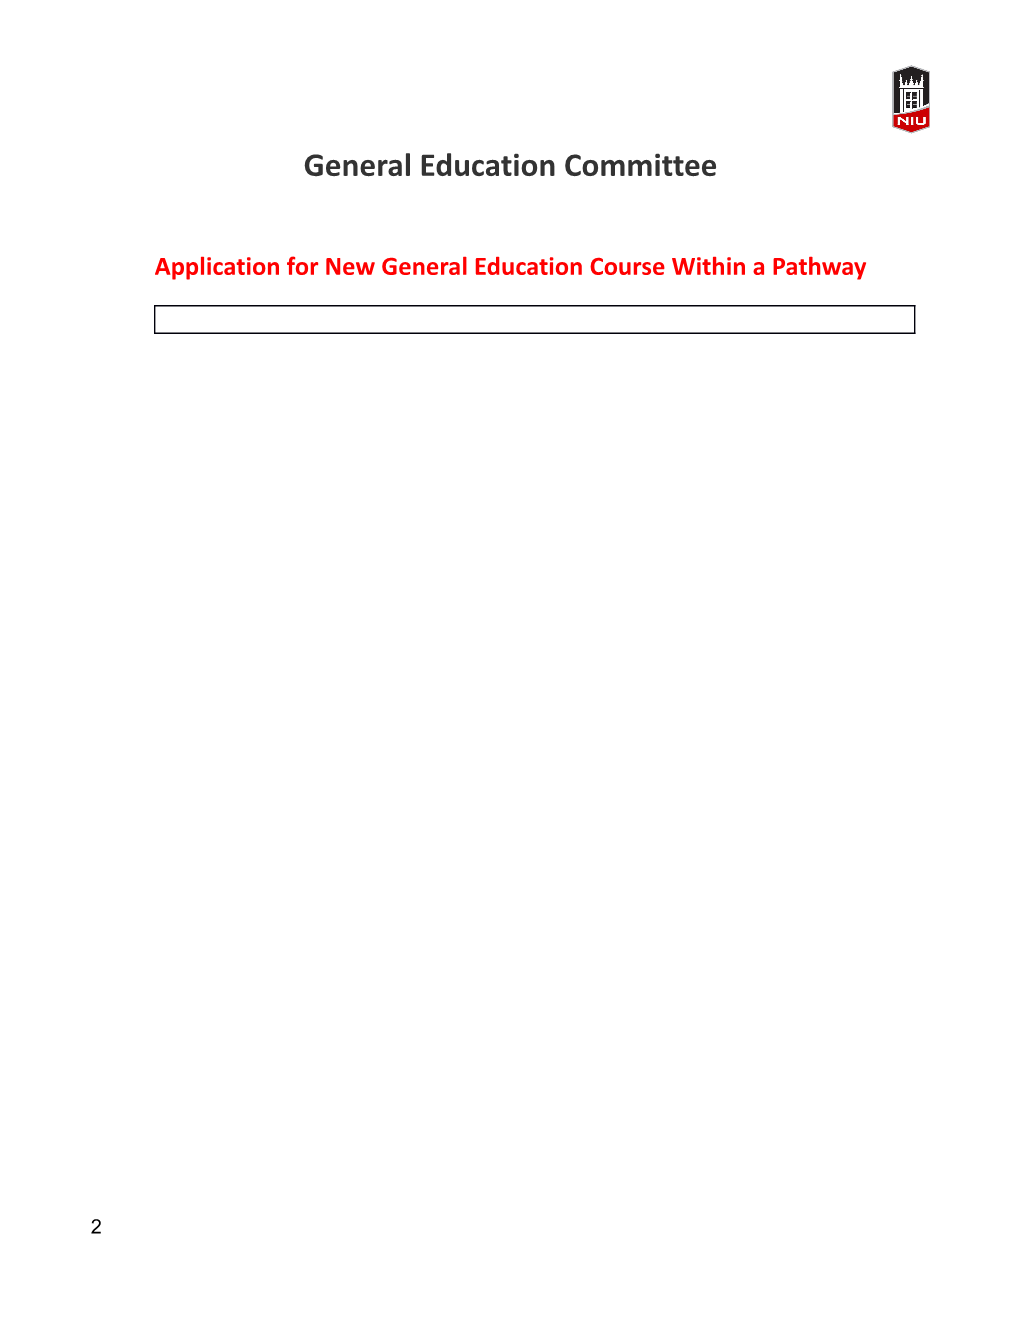 General Education Committee s2